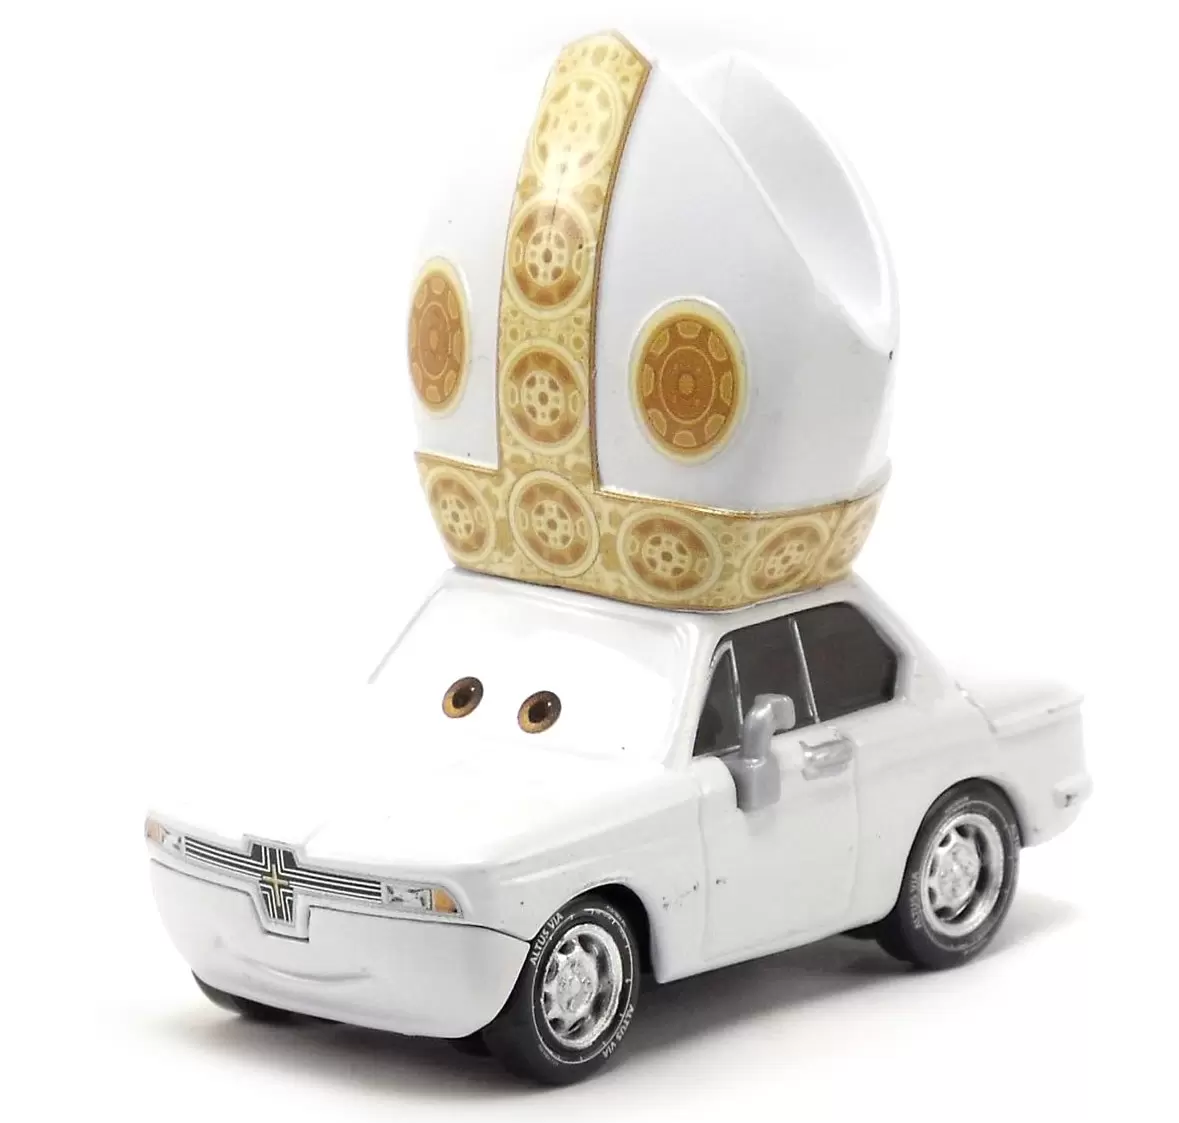 Cars 2 - Pope Pinion IV